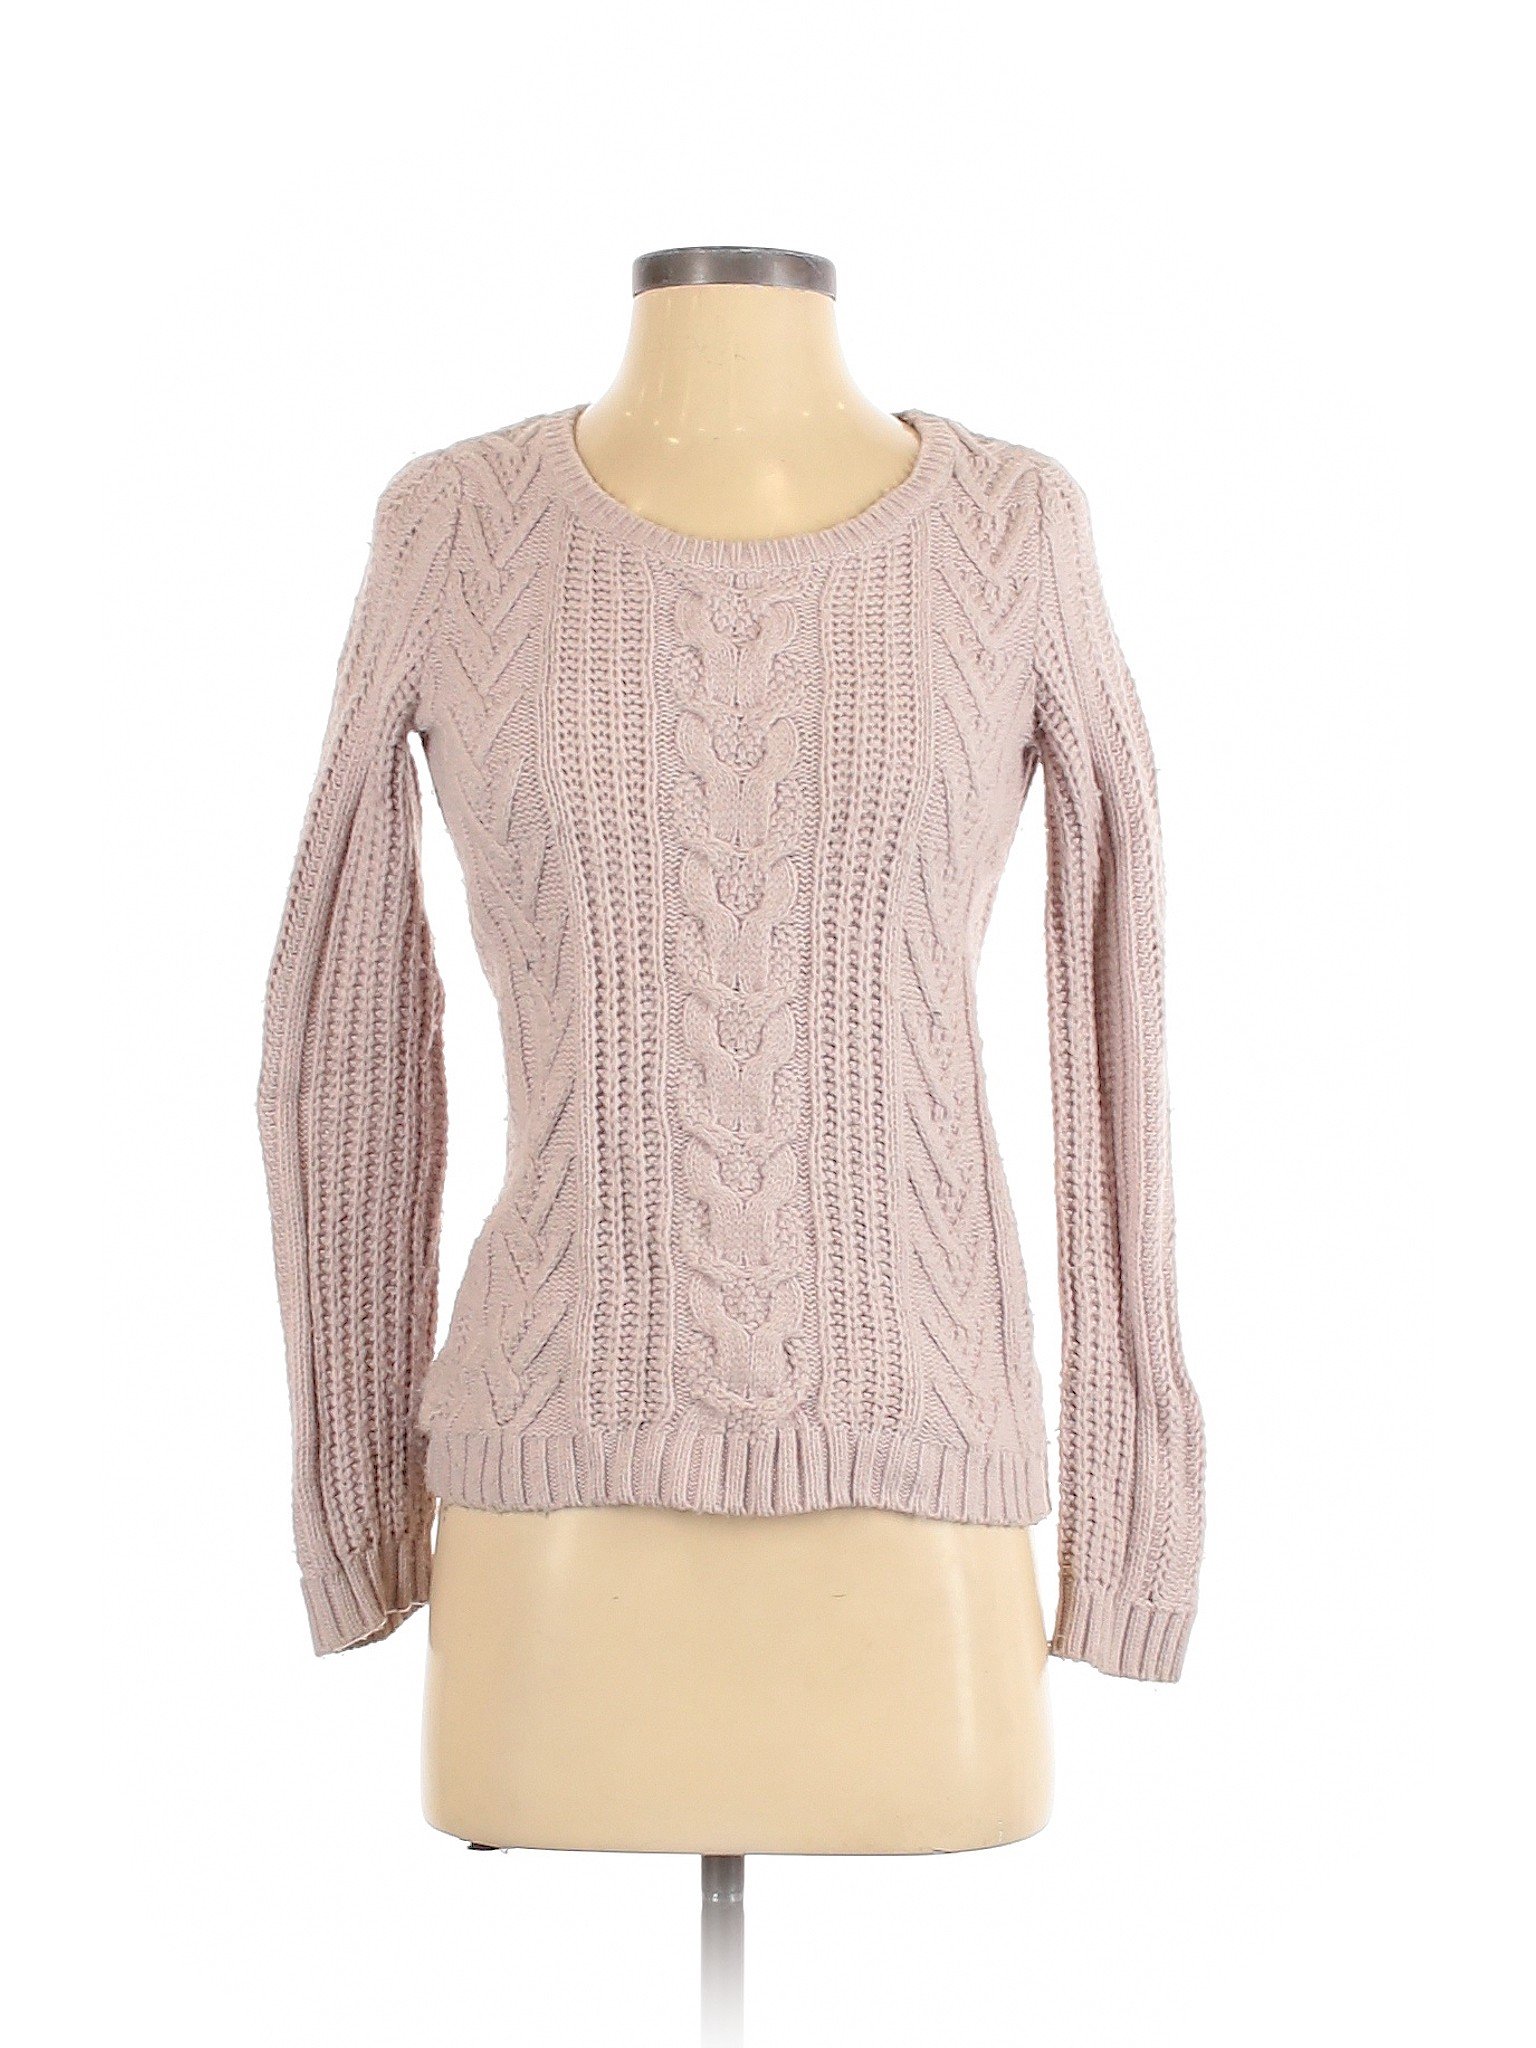 Gap Women Pink Pullover Sweater XS | eBay